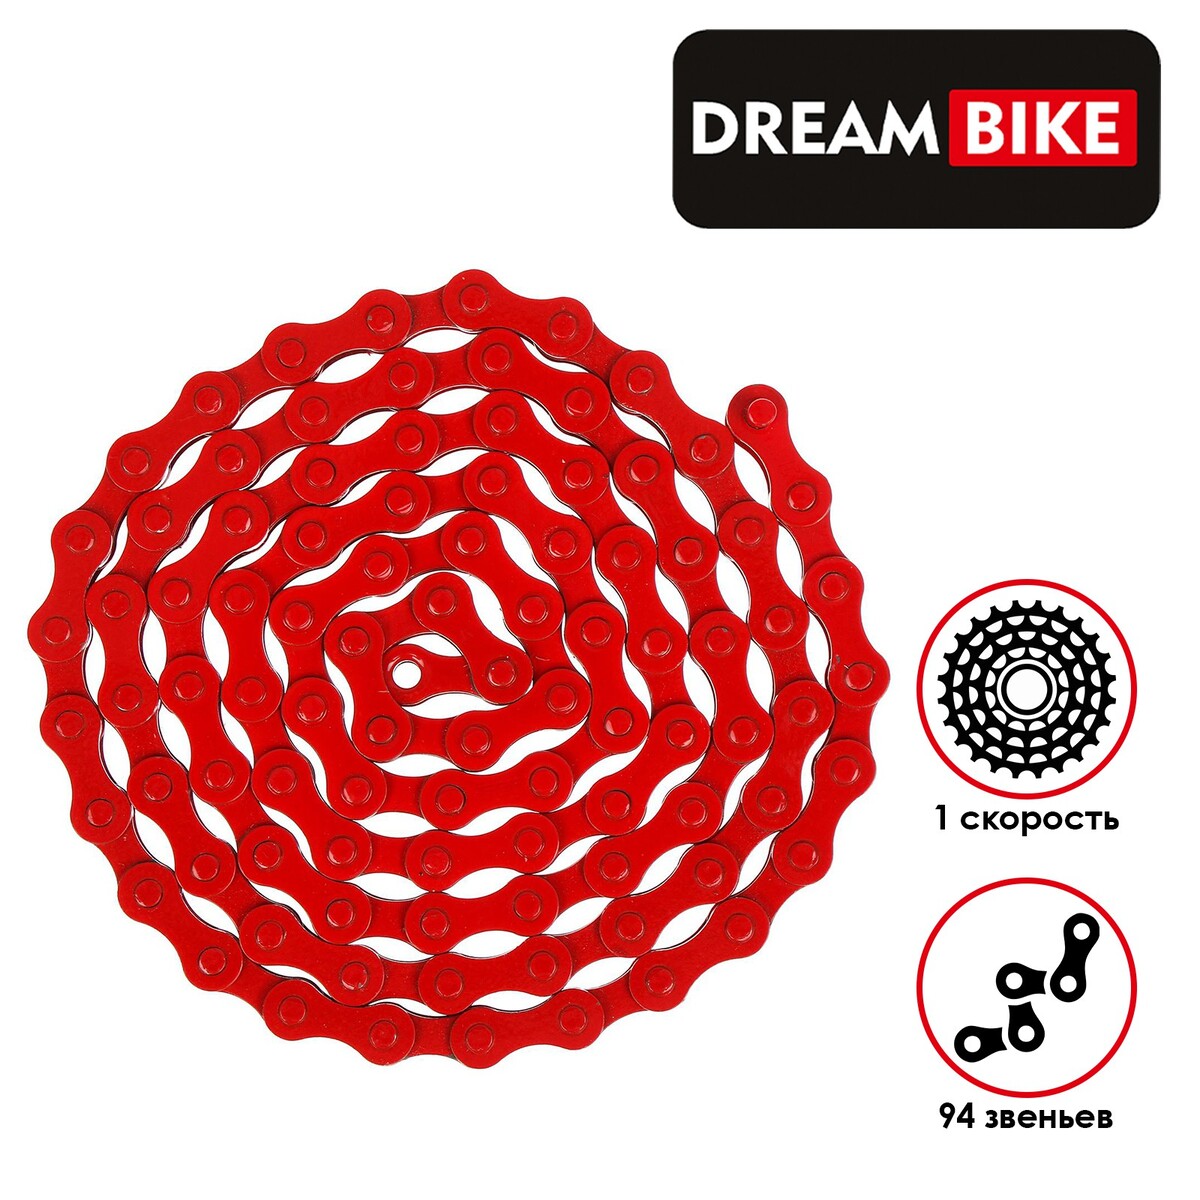 Цепь dream bike, 1 скорость, цвет красный замок цепи dream bike для односкоростных цепей